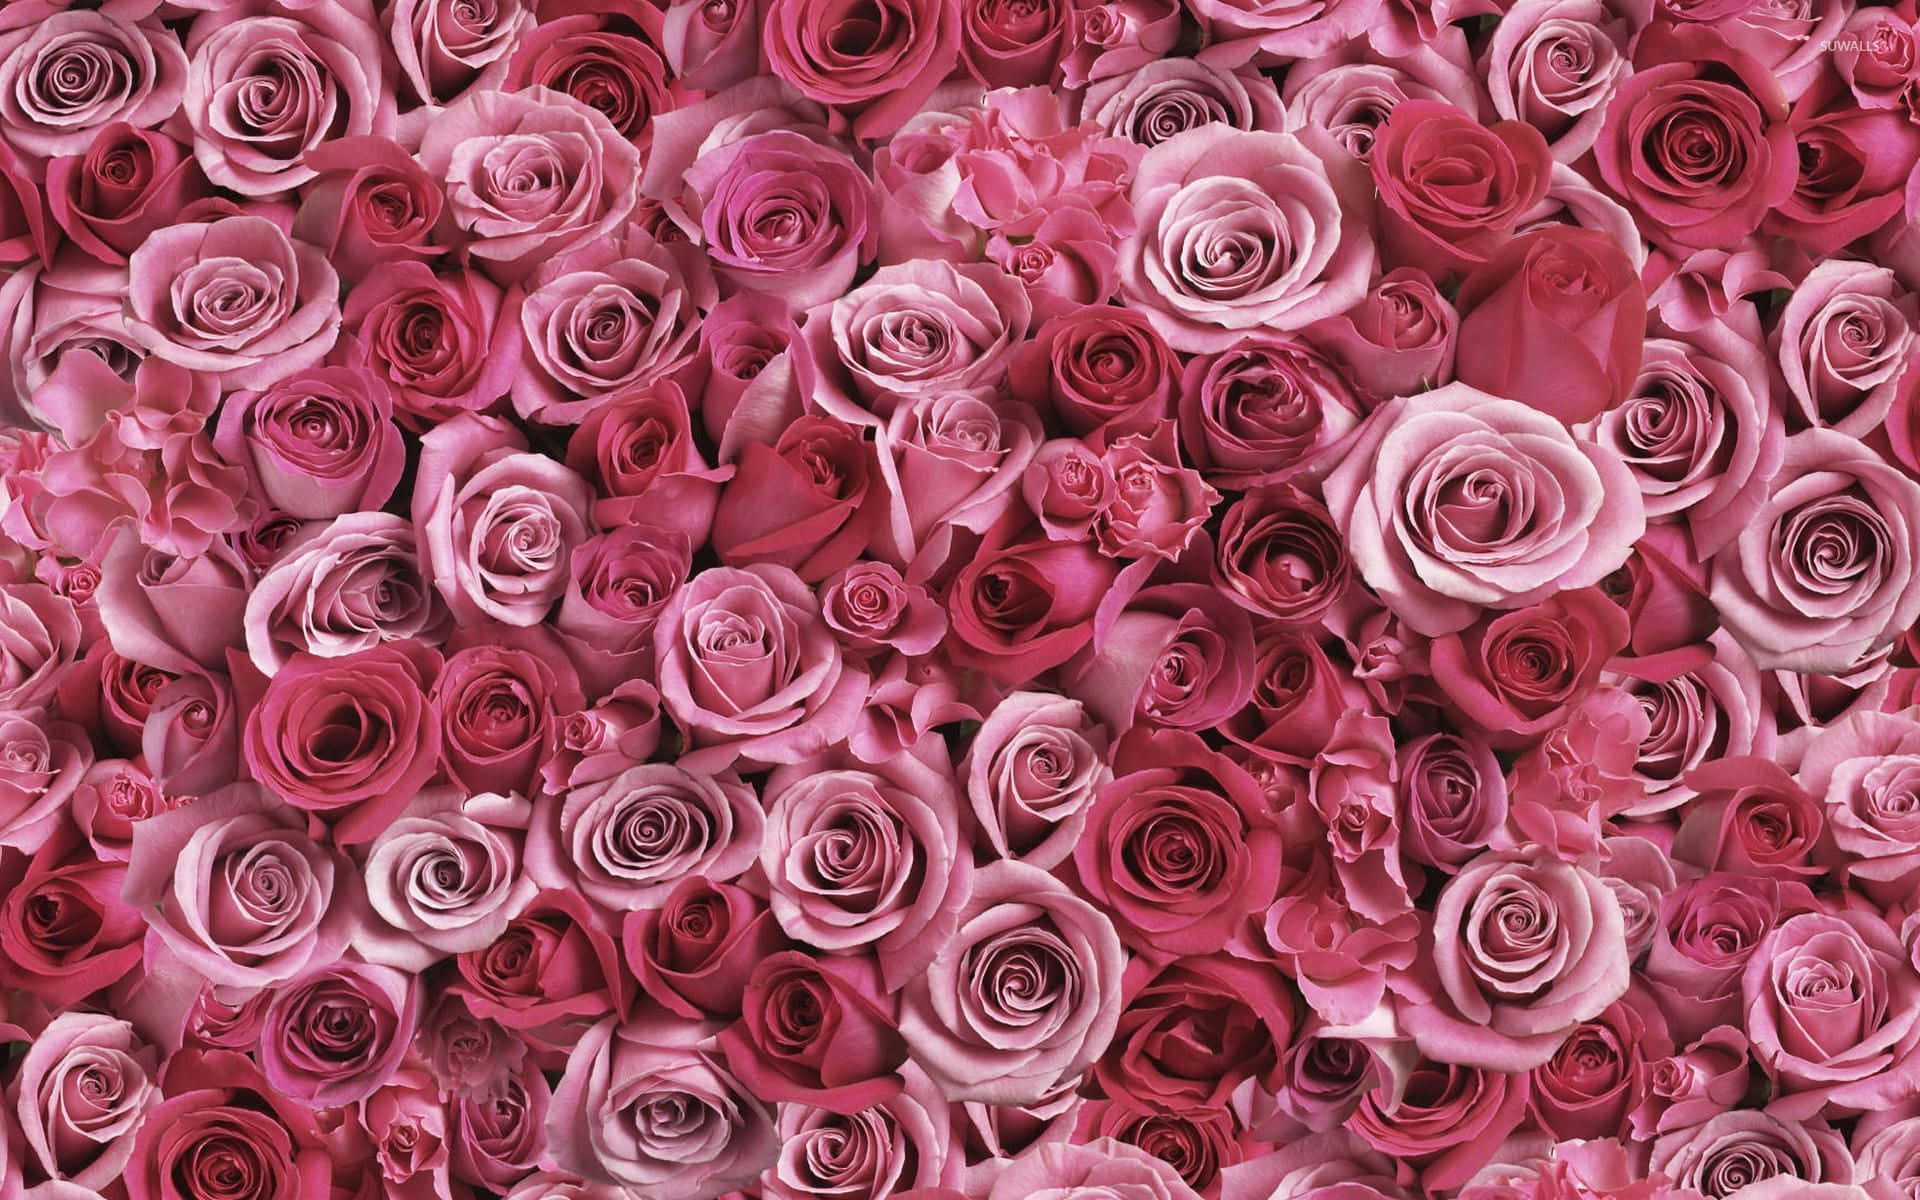 Bellezade La Naturaleza - Rosas Rojas